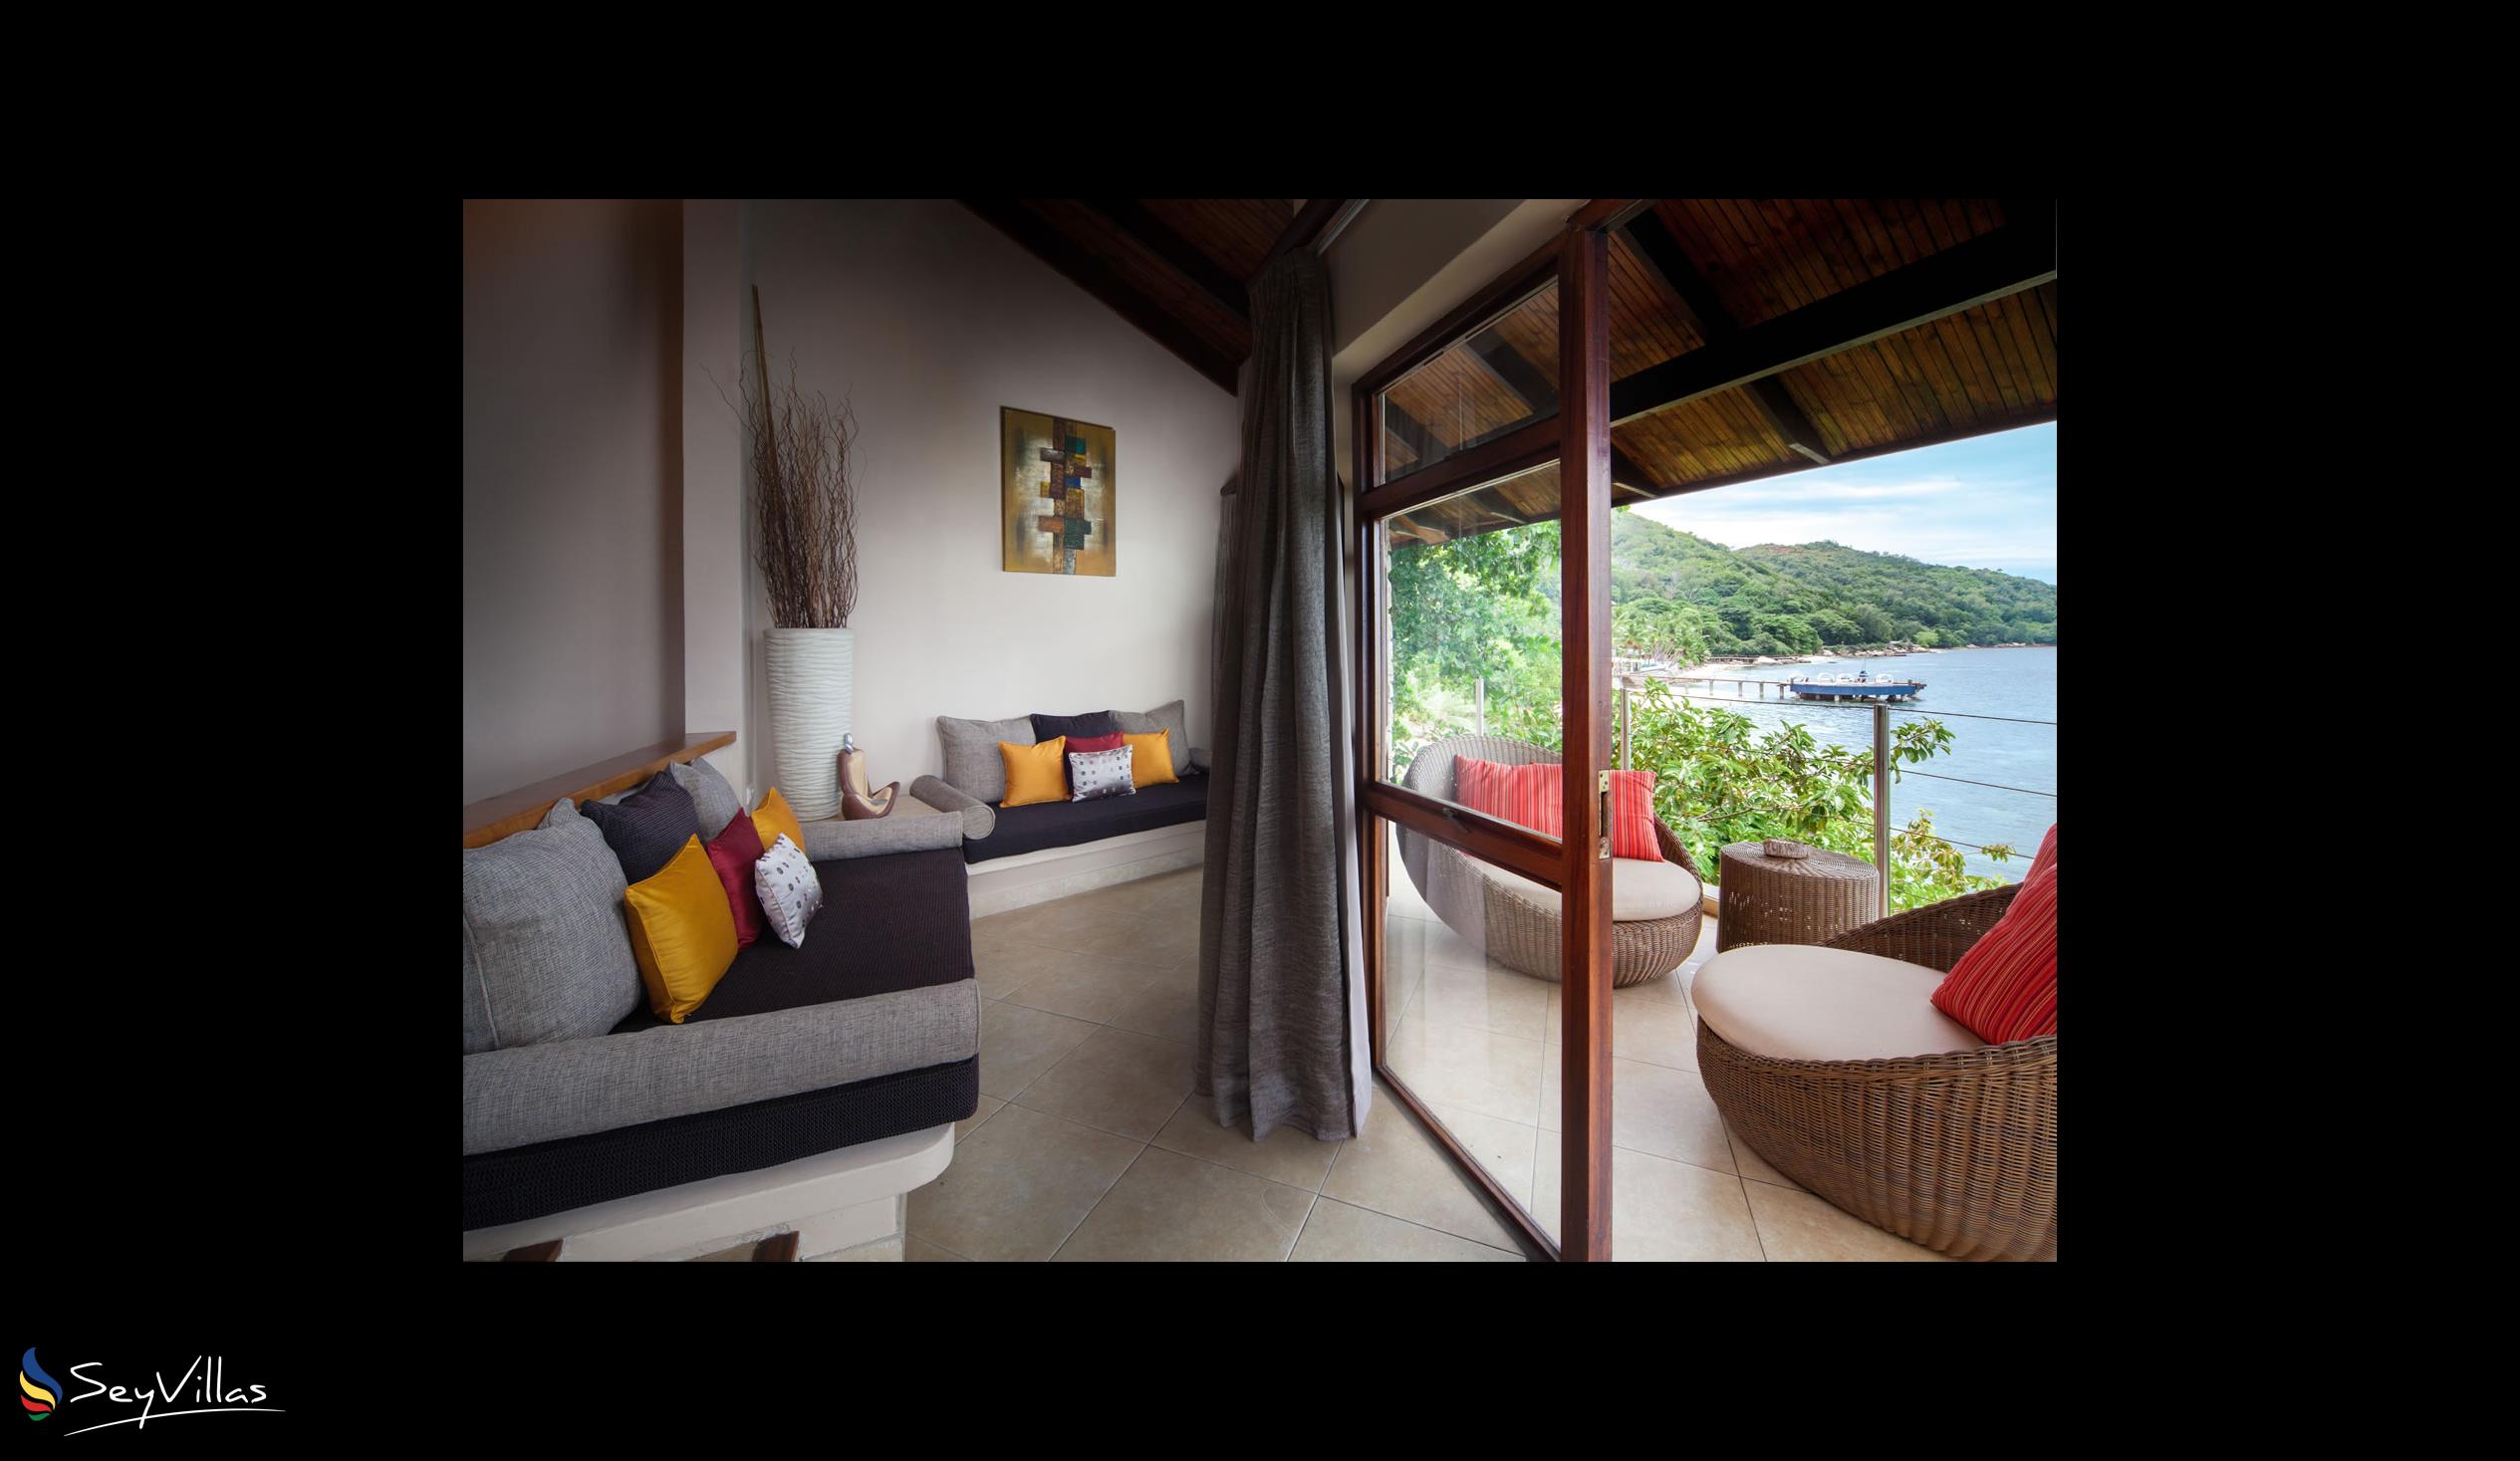 Photo 77: Coco de Mer & Black Parrot Suites - Standard - Praslin (Seychelles)